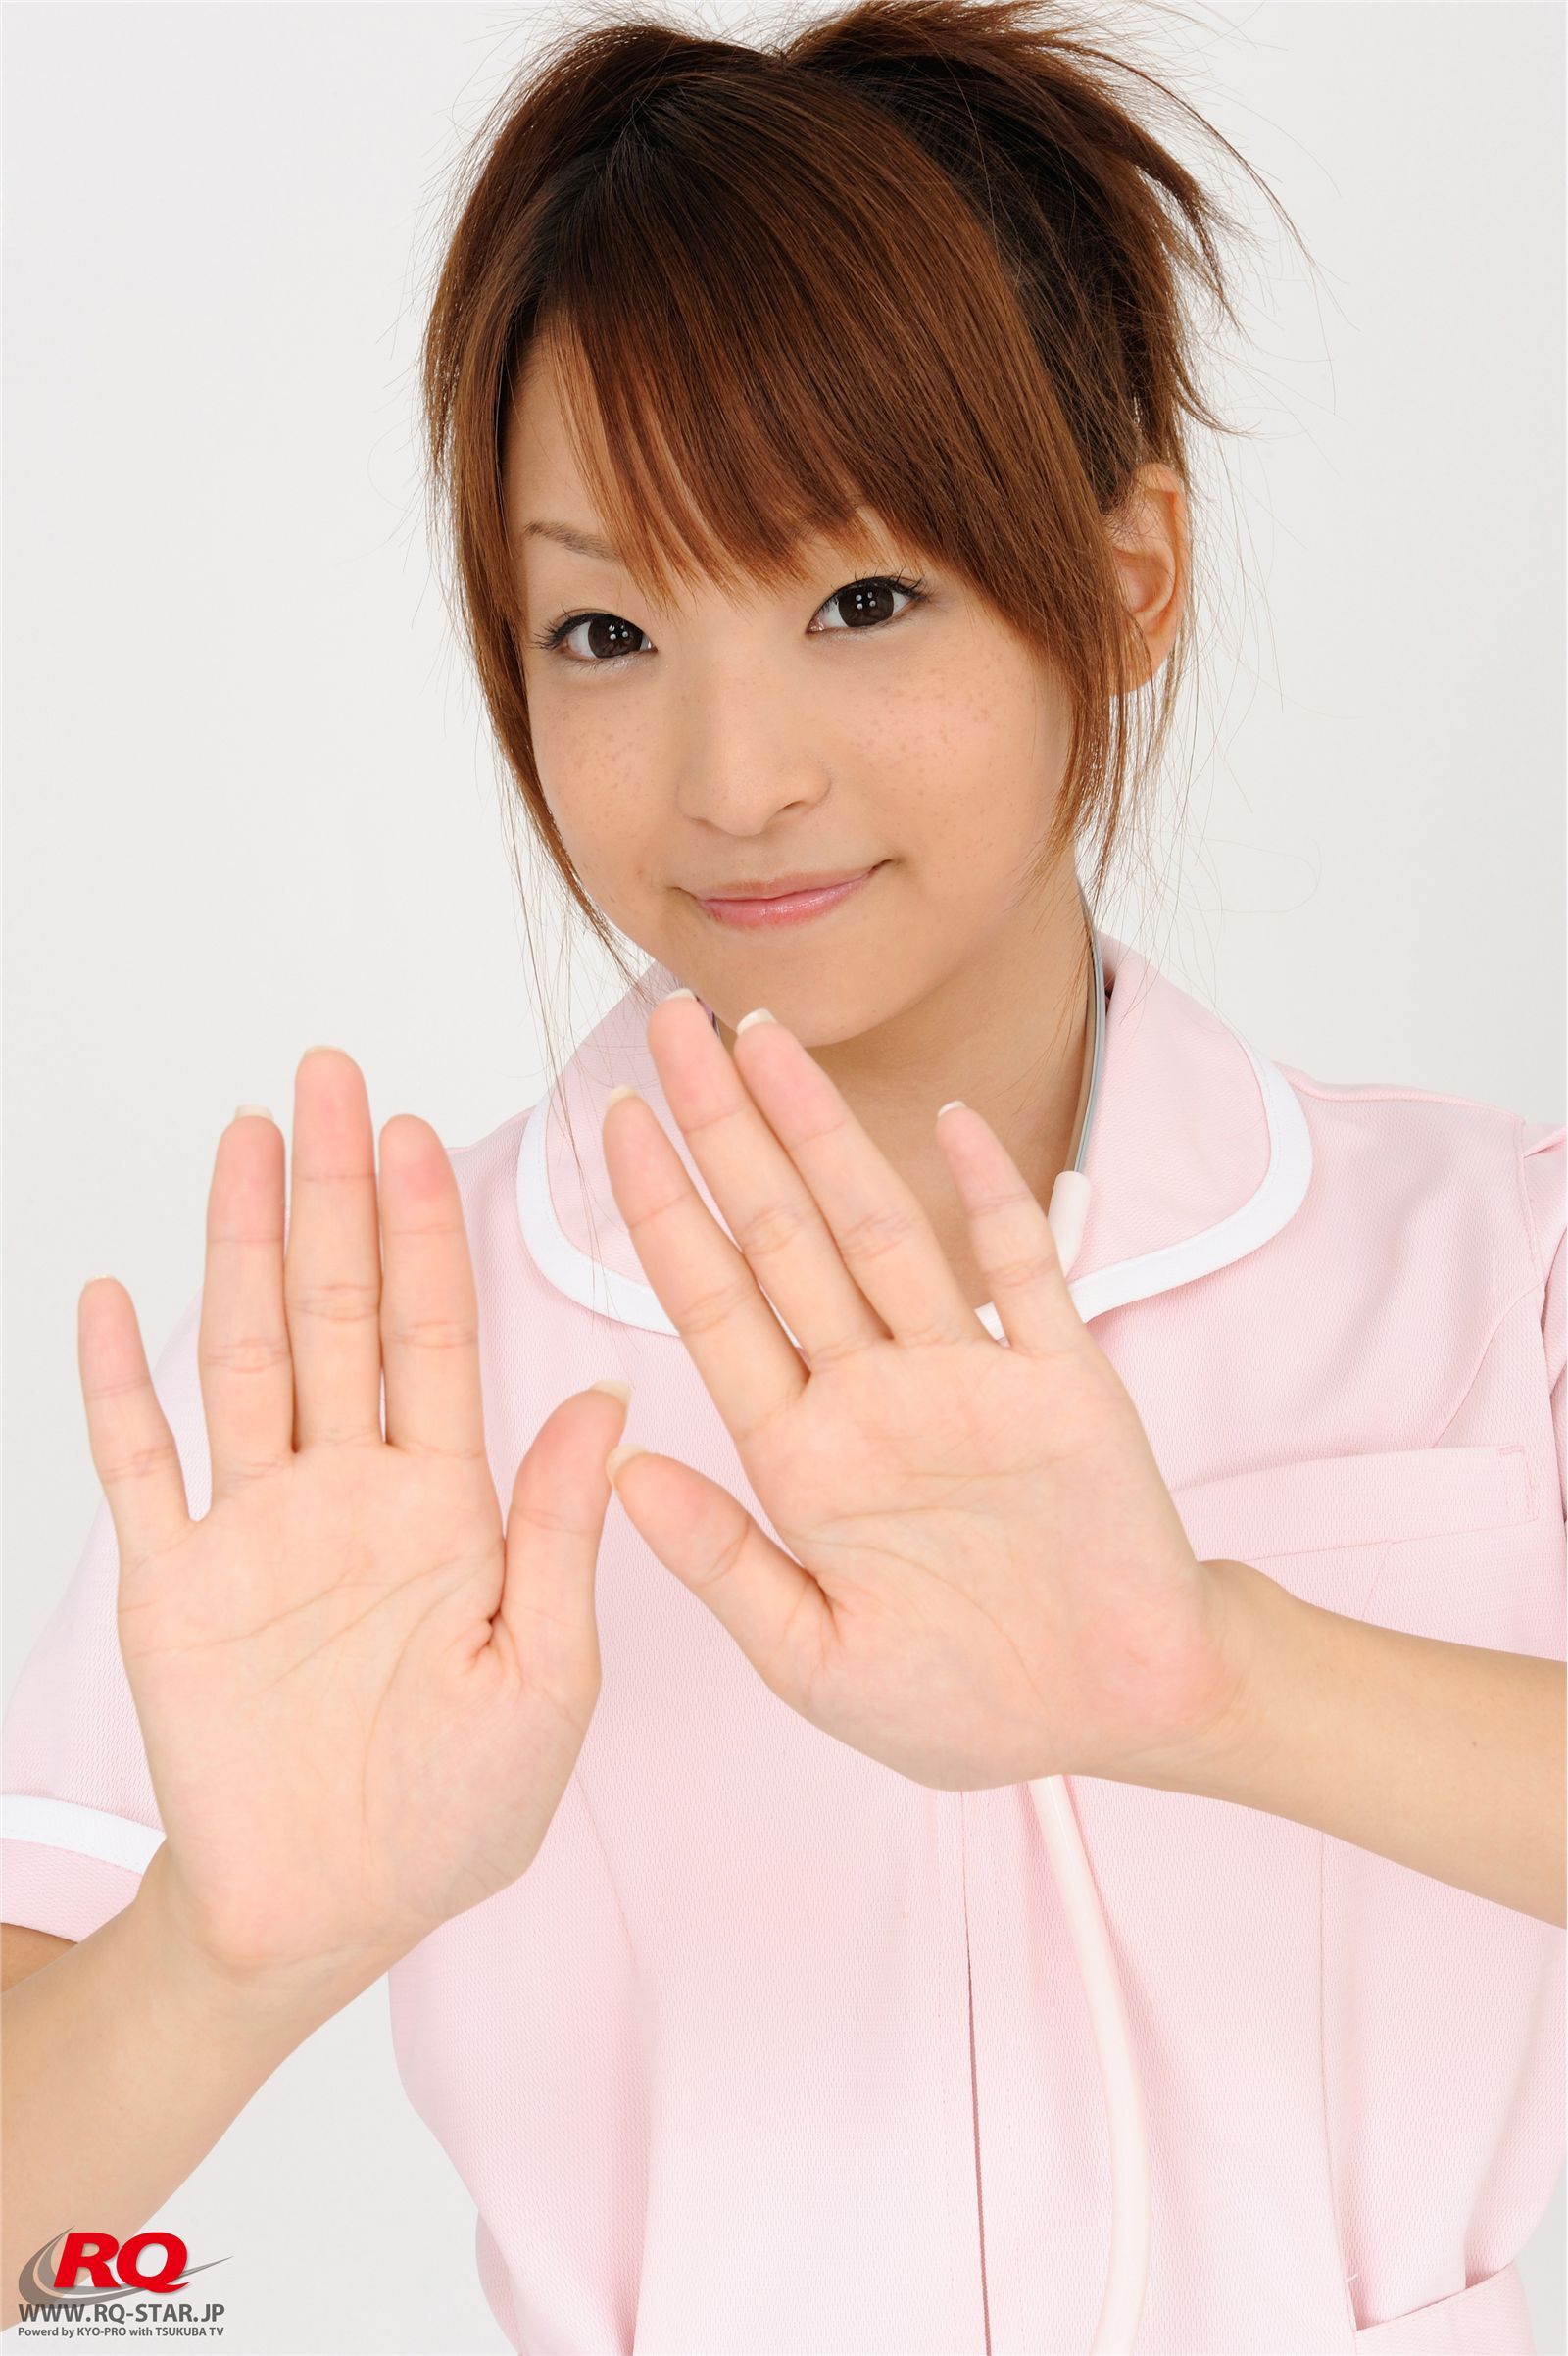 Mio Aoki no.00083 rq-star Japan HD uniform beauty photo